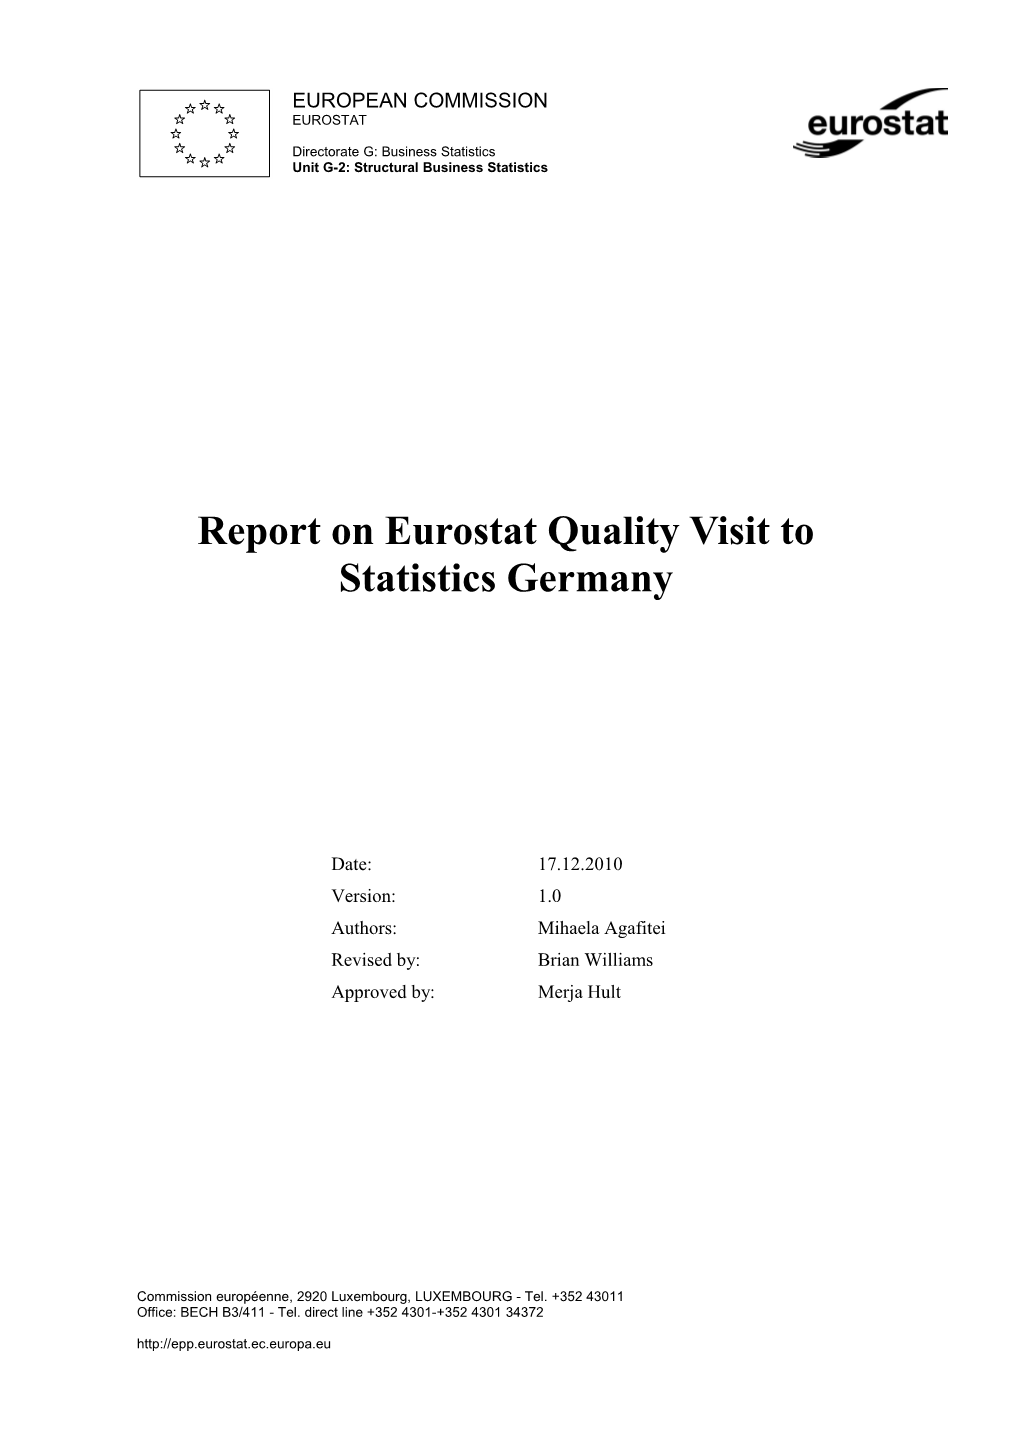 Report on Eurostat Quality Visit to Statistics Germany